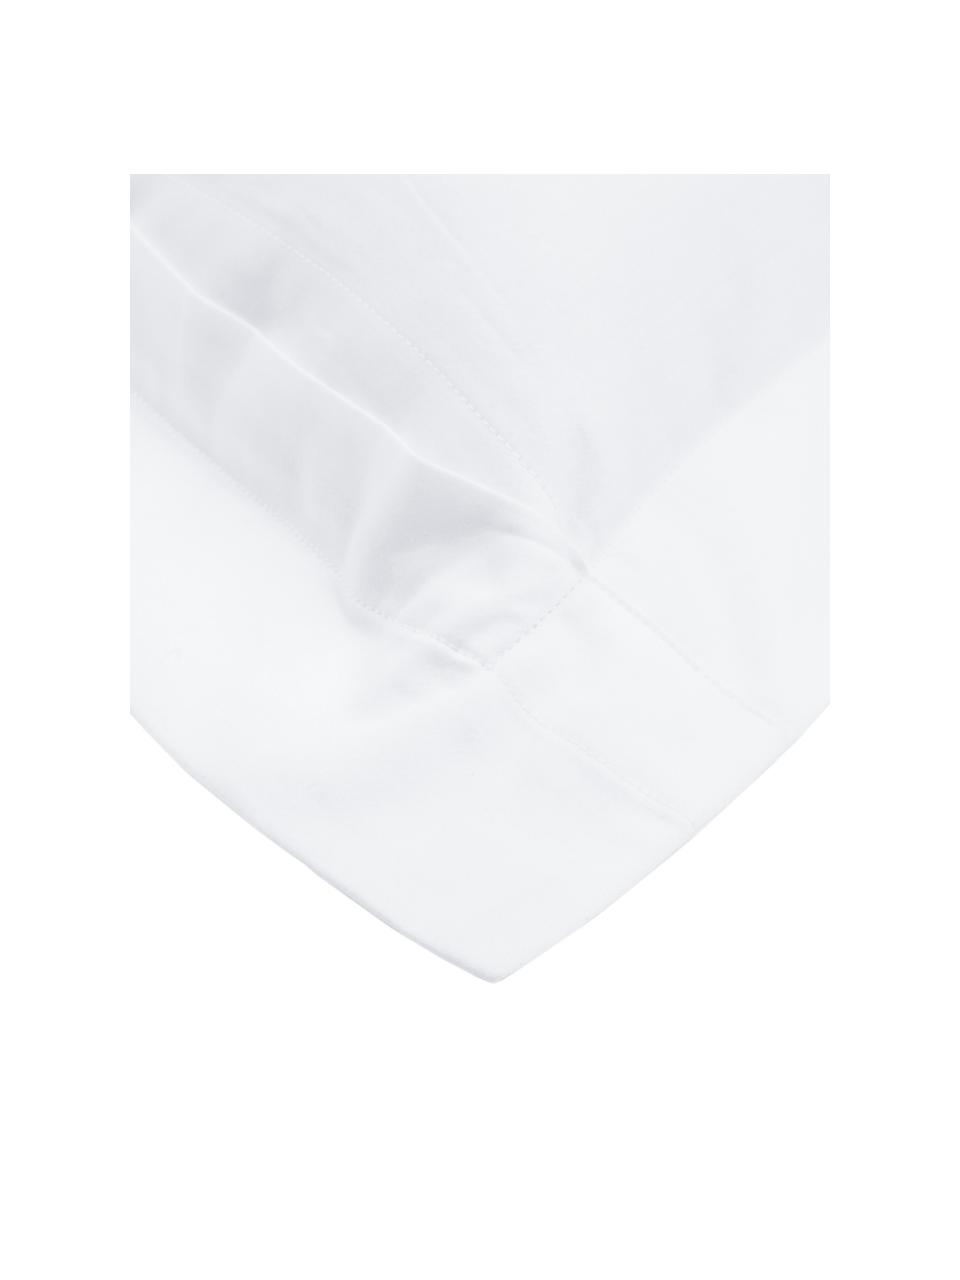 Funda de almohada de satén Premium, Blanco, An 45 x L 110 cm